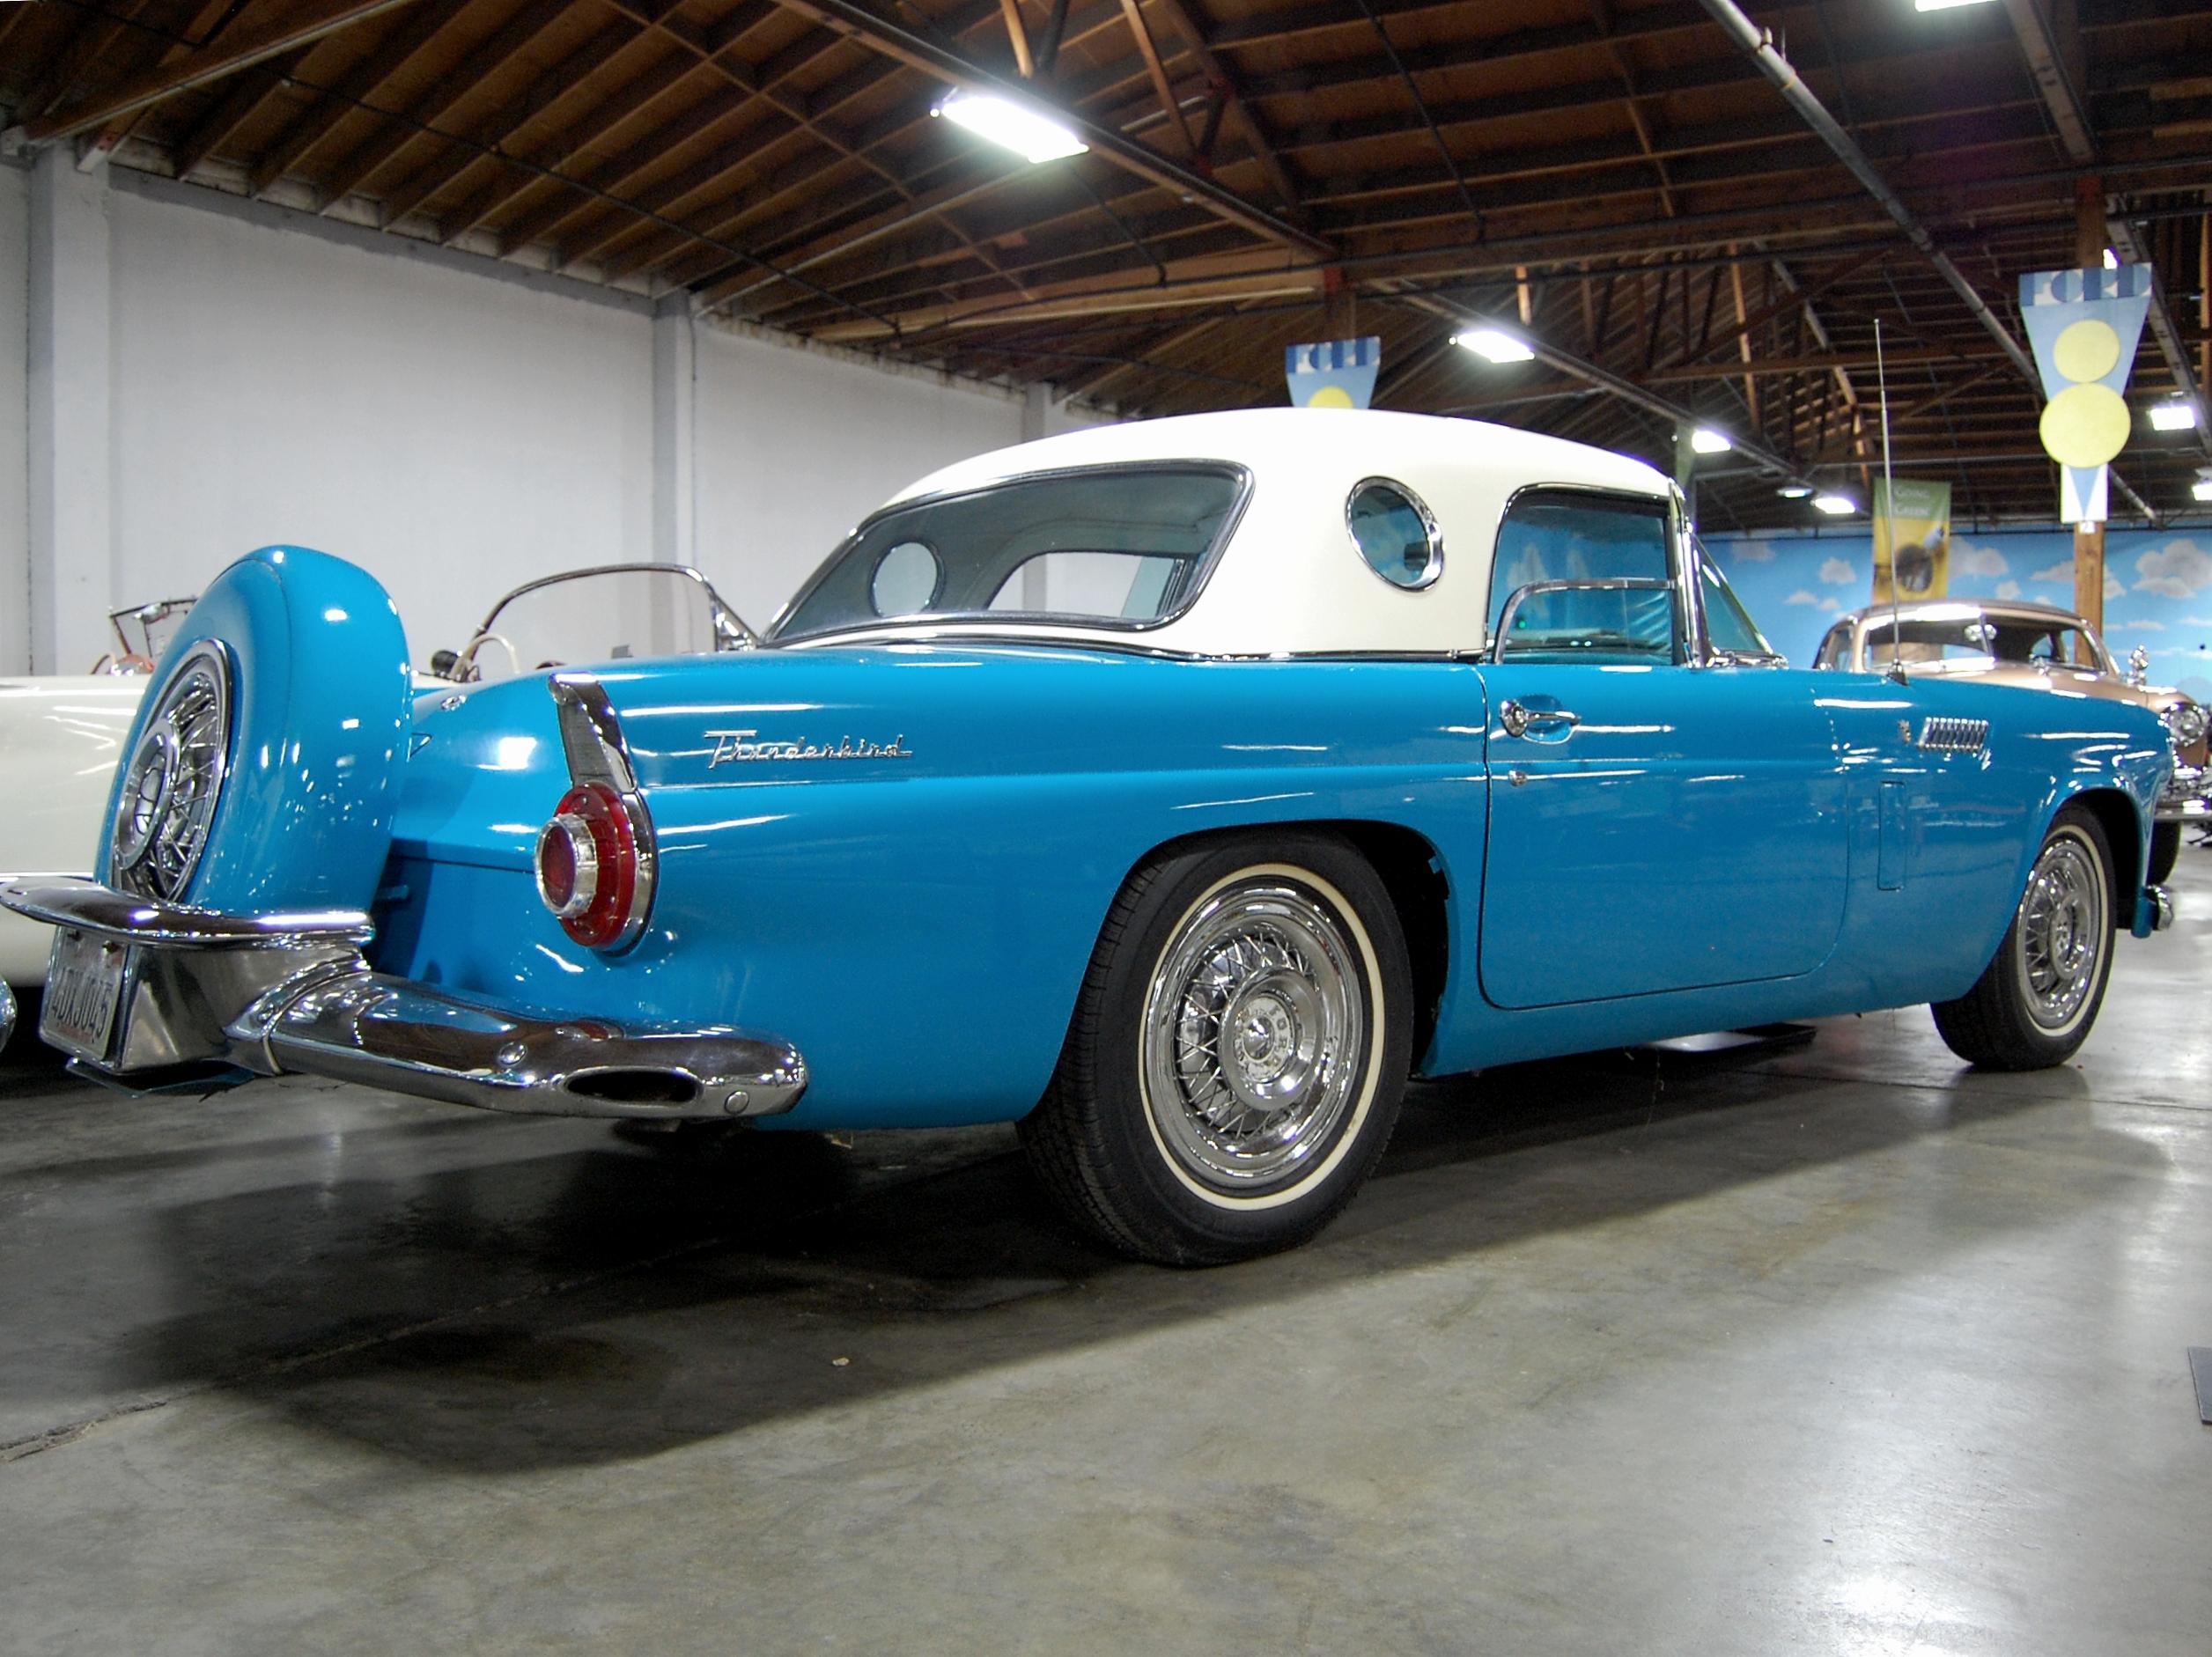 1956 Ford Thunderbird in eye-catching blue